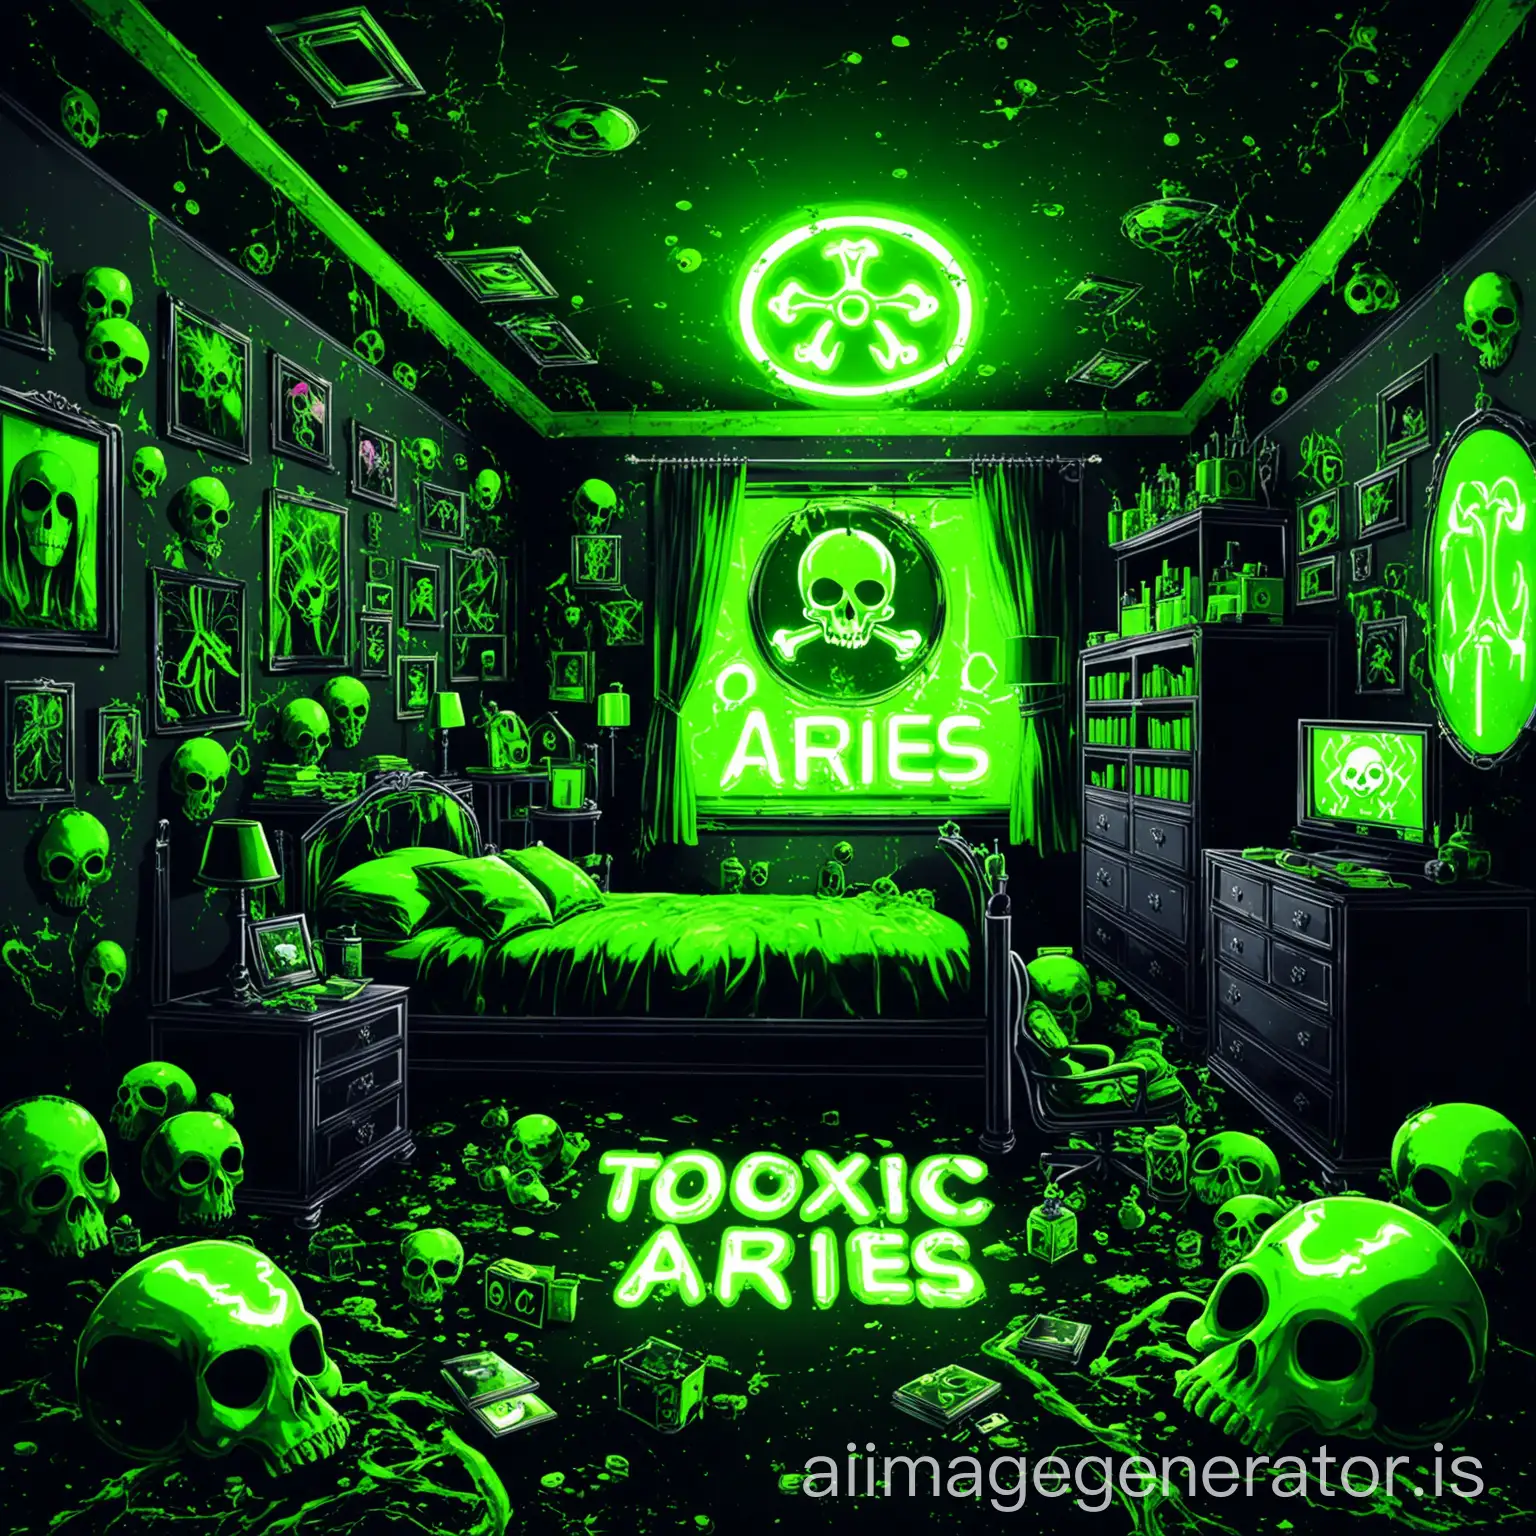 Vibrant-Aries-Room-with-Toxic-Overtones